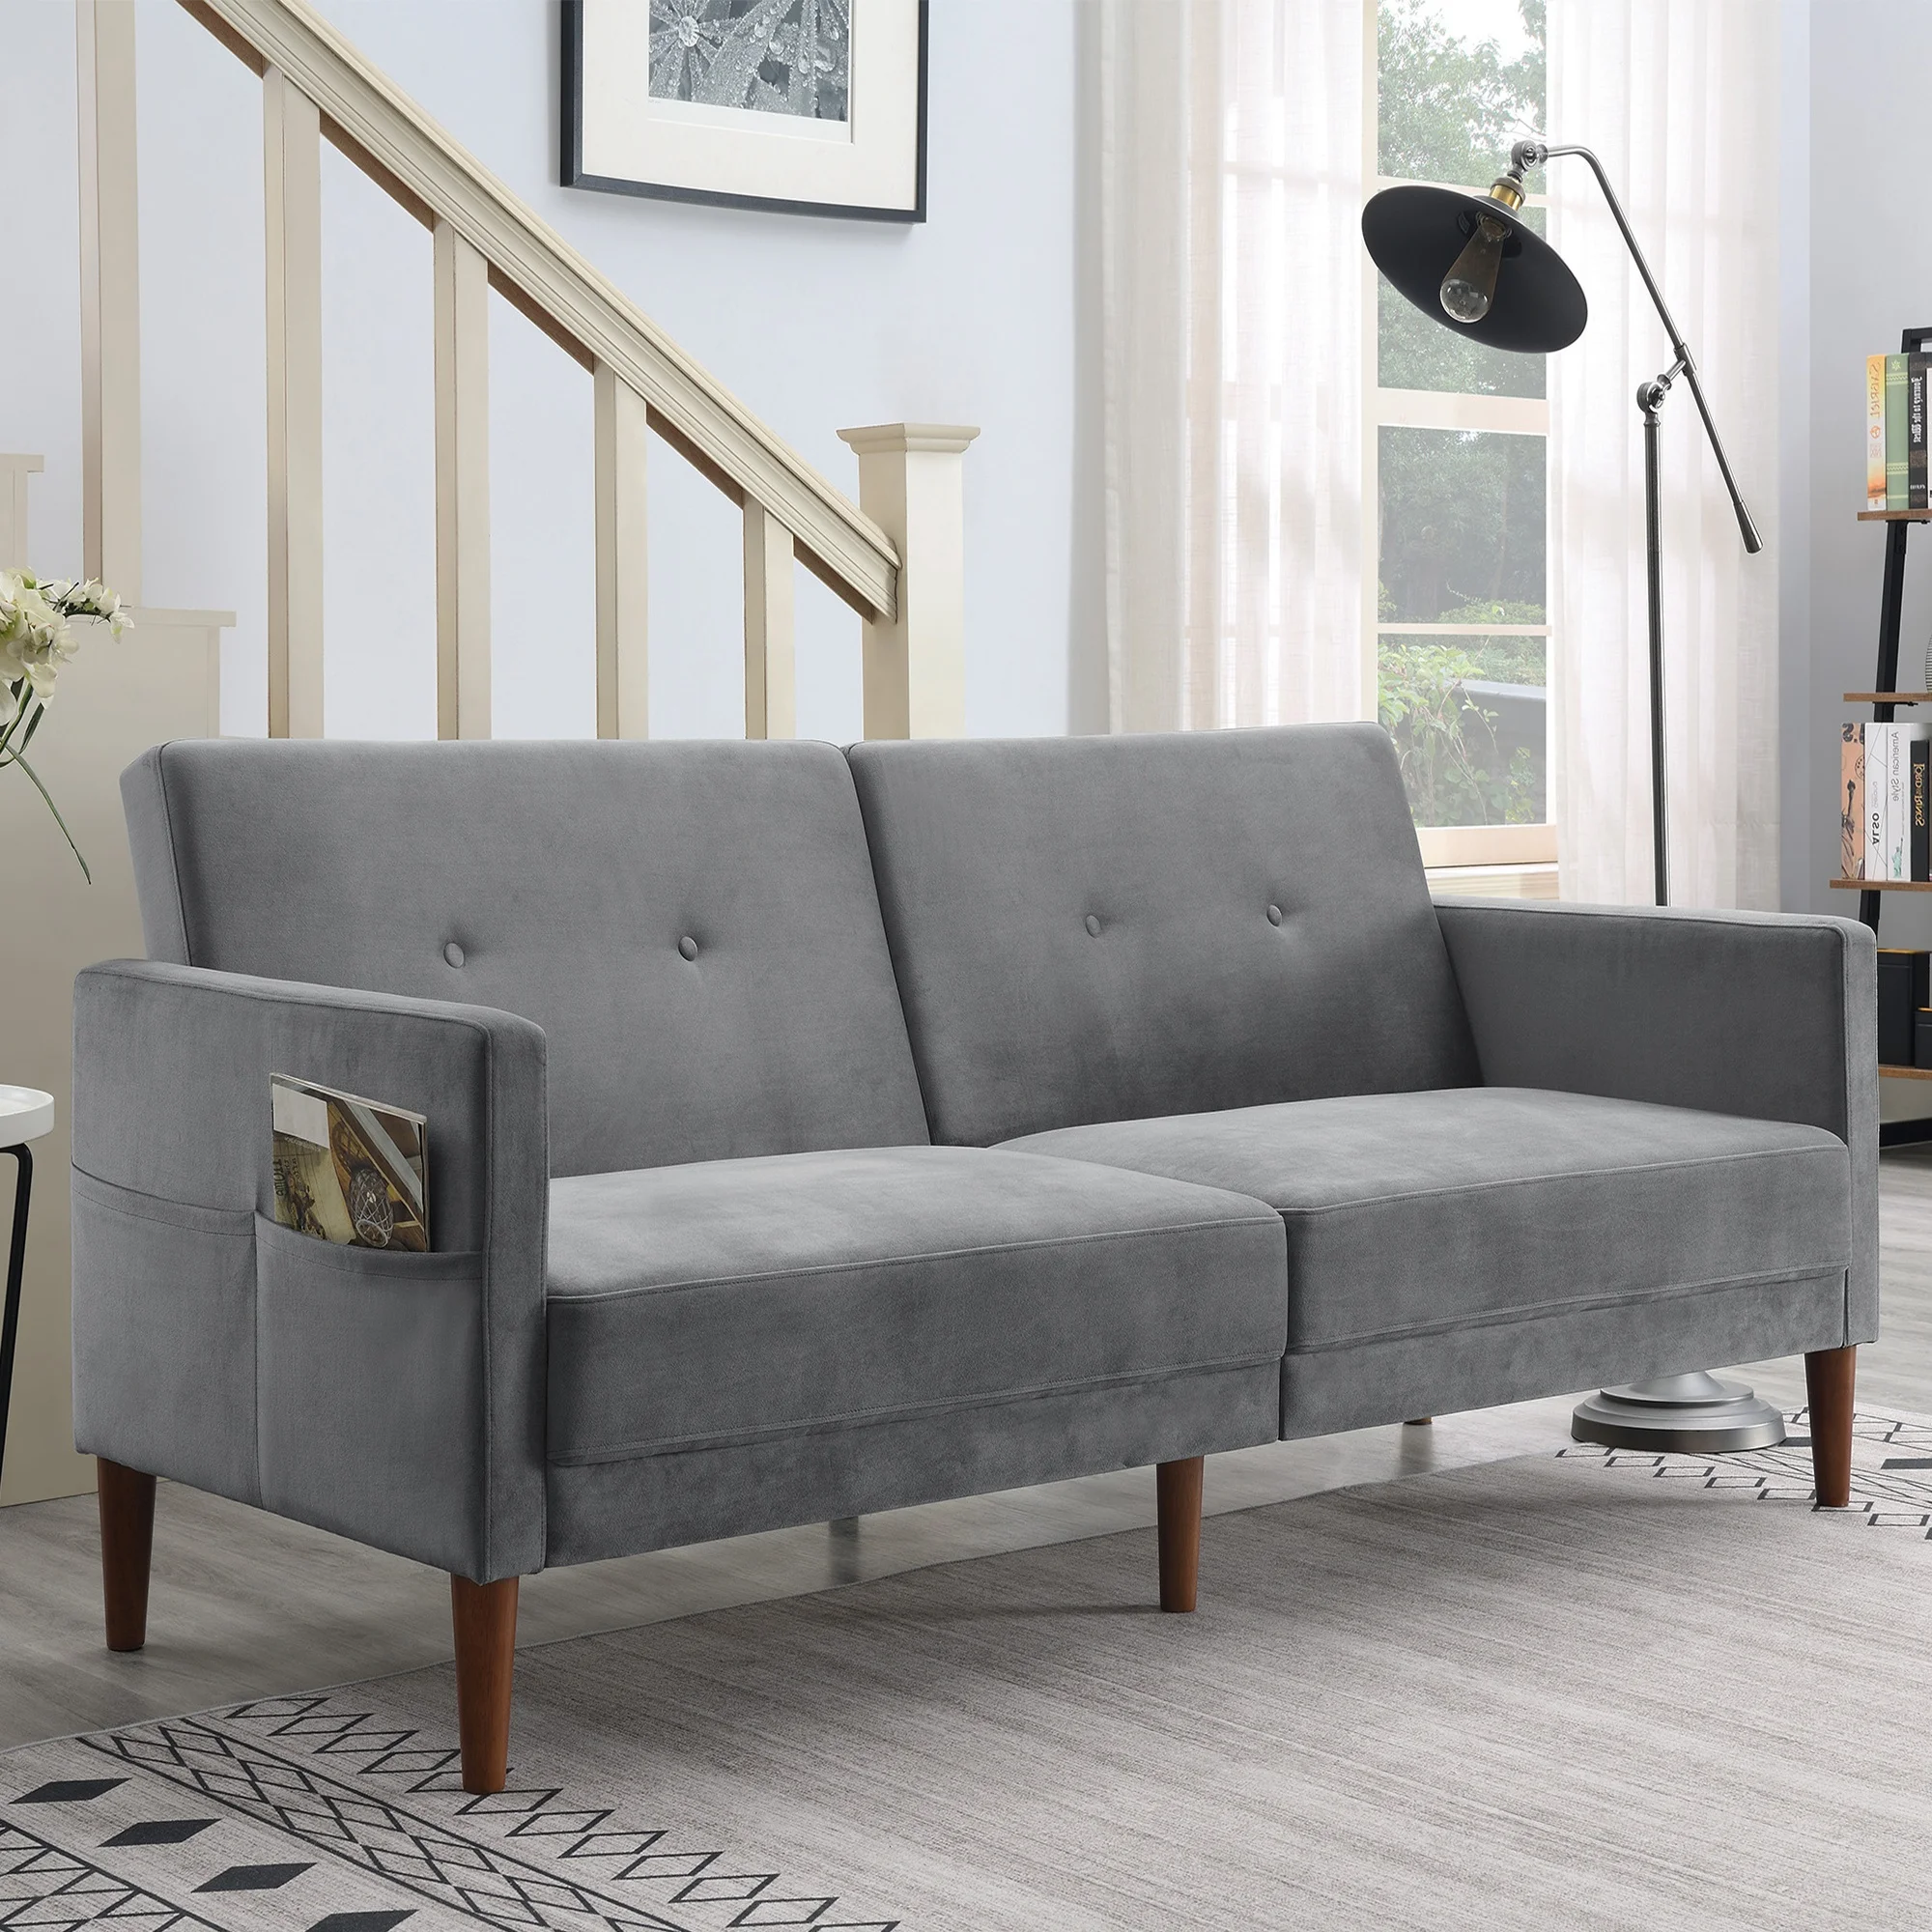 

Velvet Upholstered Modern Convertible Folding Futon Sofa Bed for Compact Living Space, Apartment, Dorm